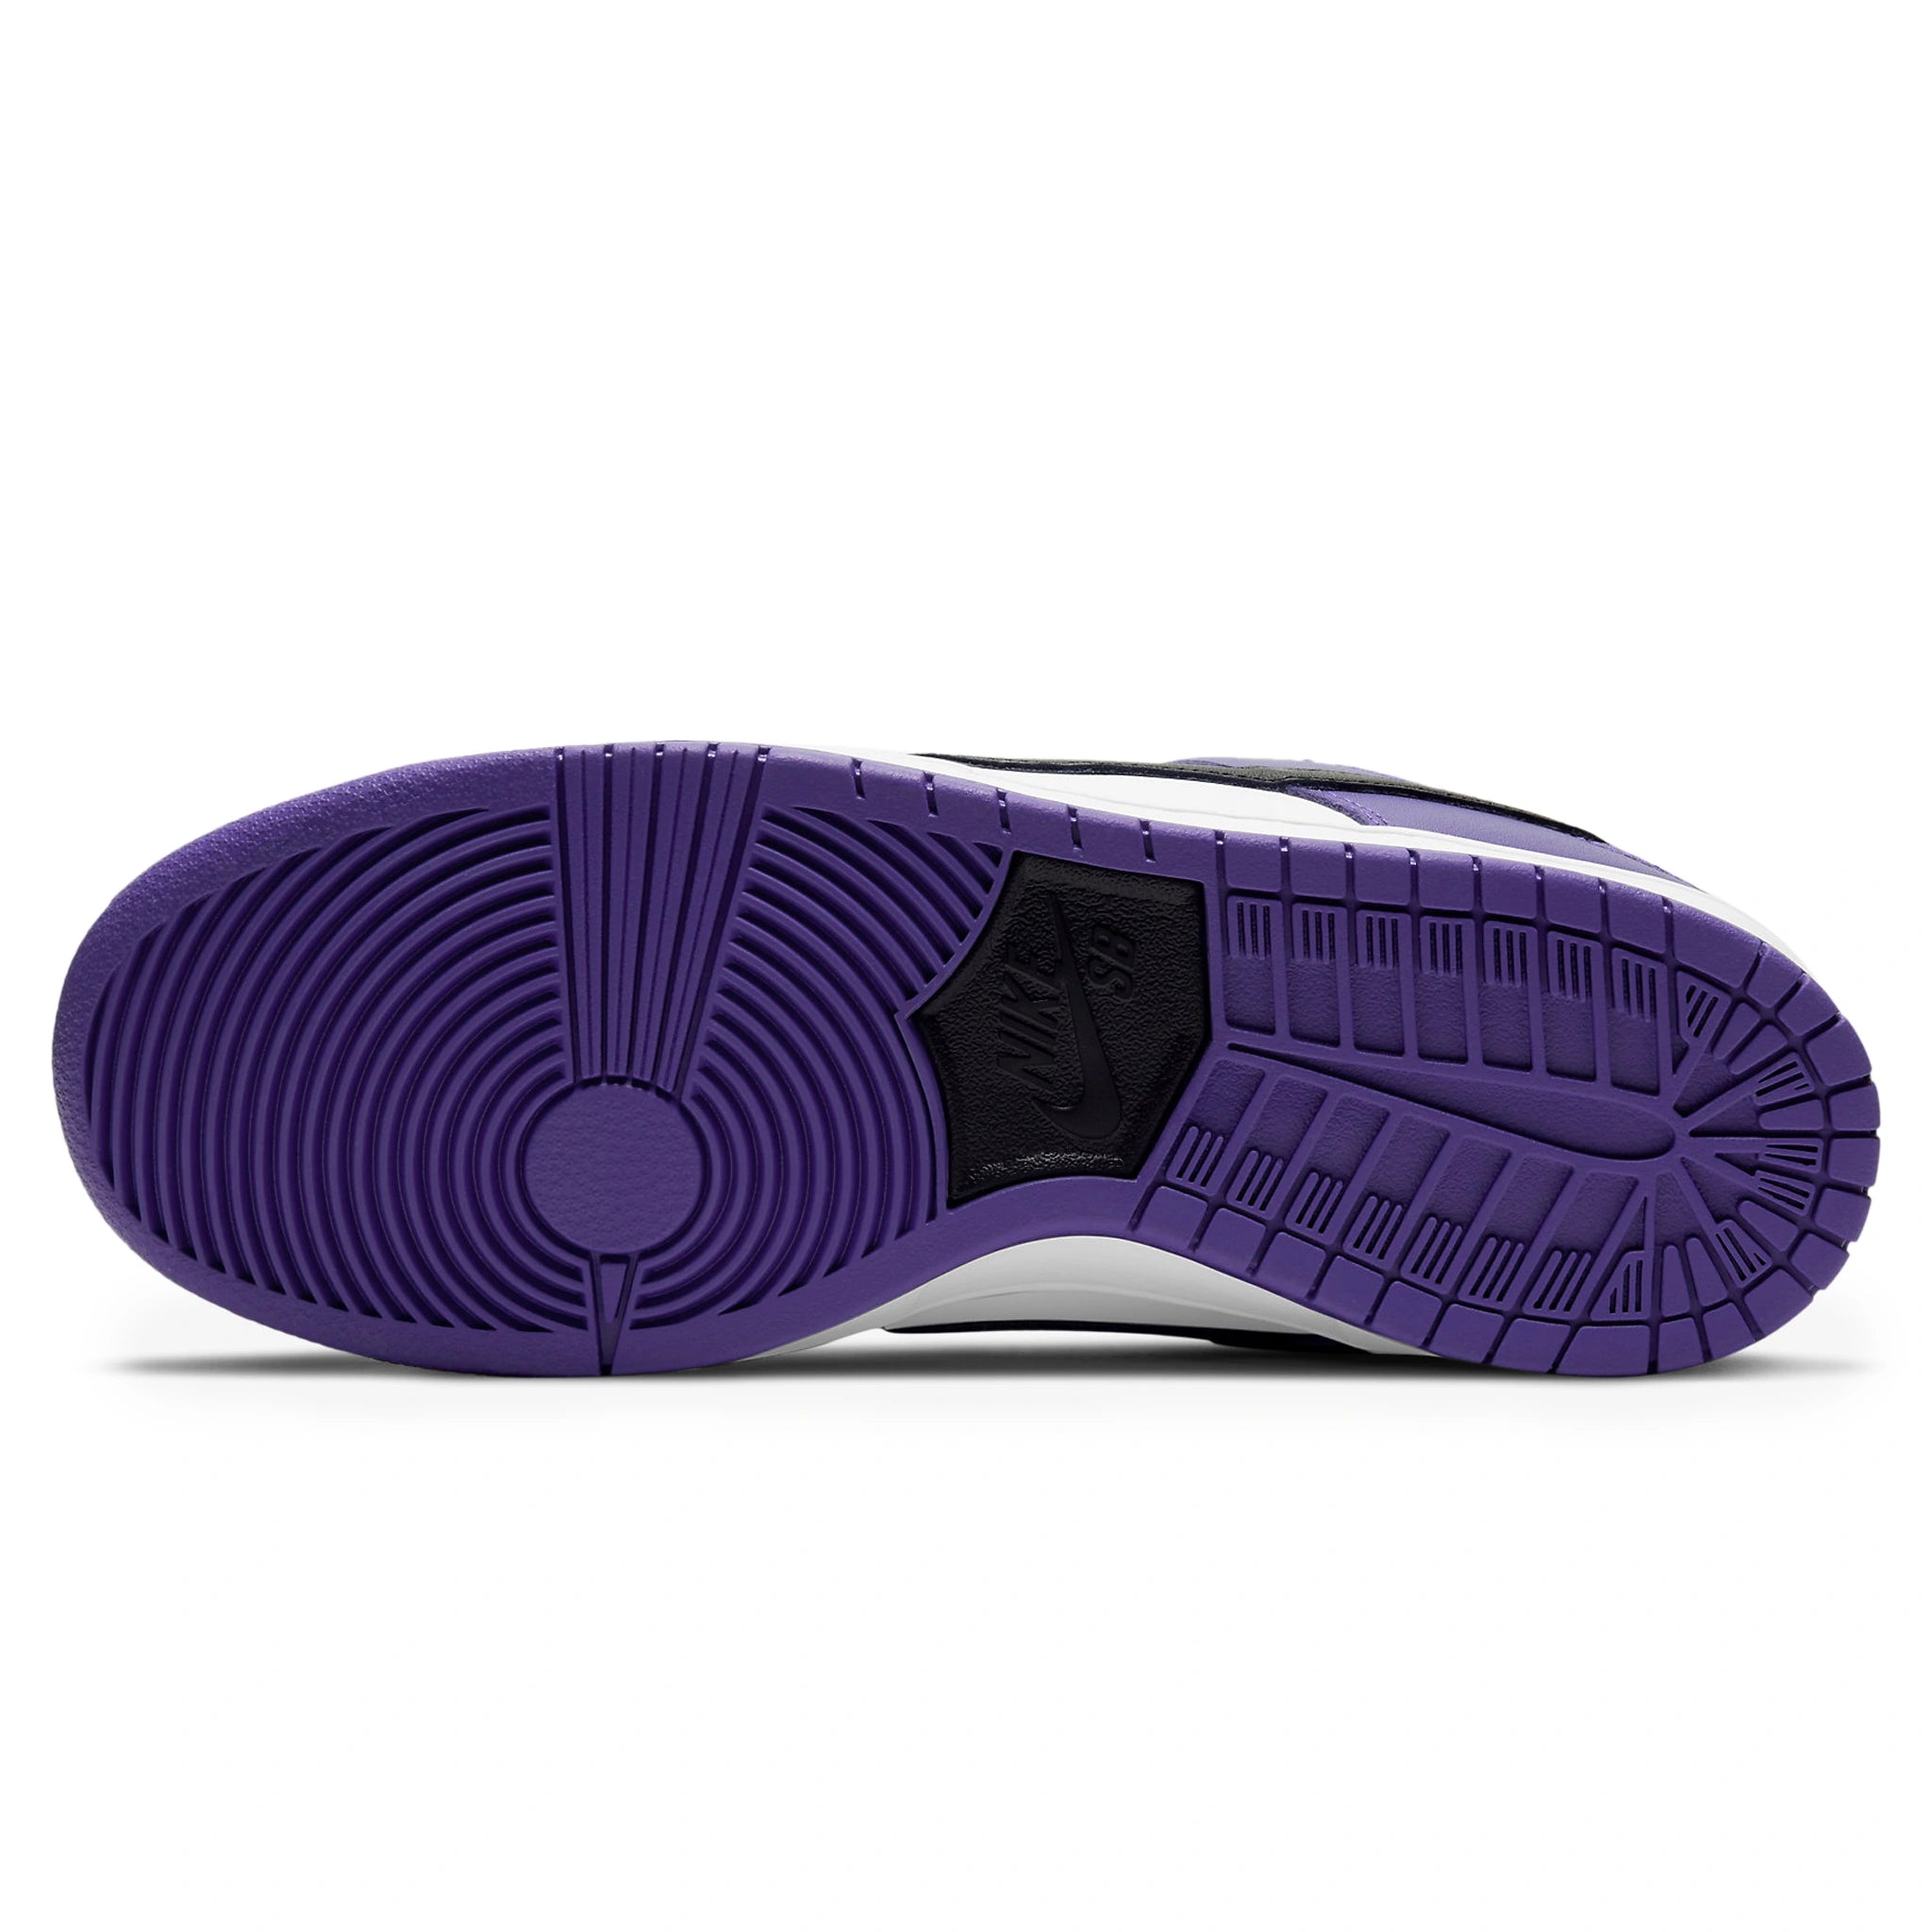 Sole view of Nike SB Dunk Low Court Purple BQ6817-500